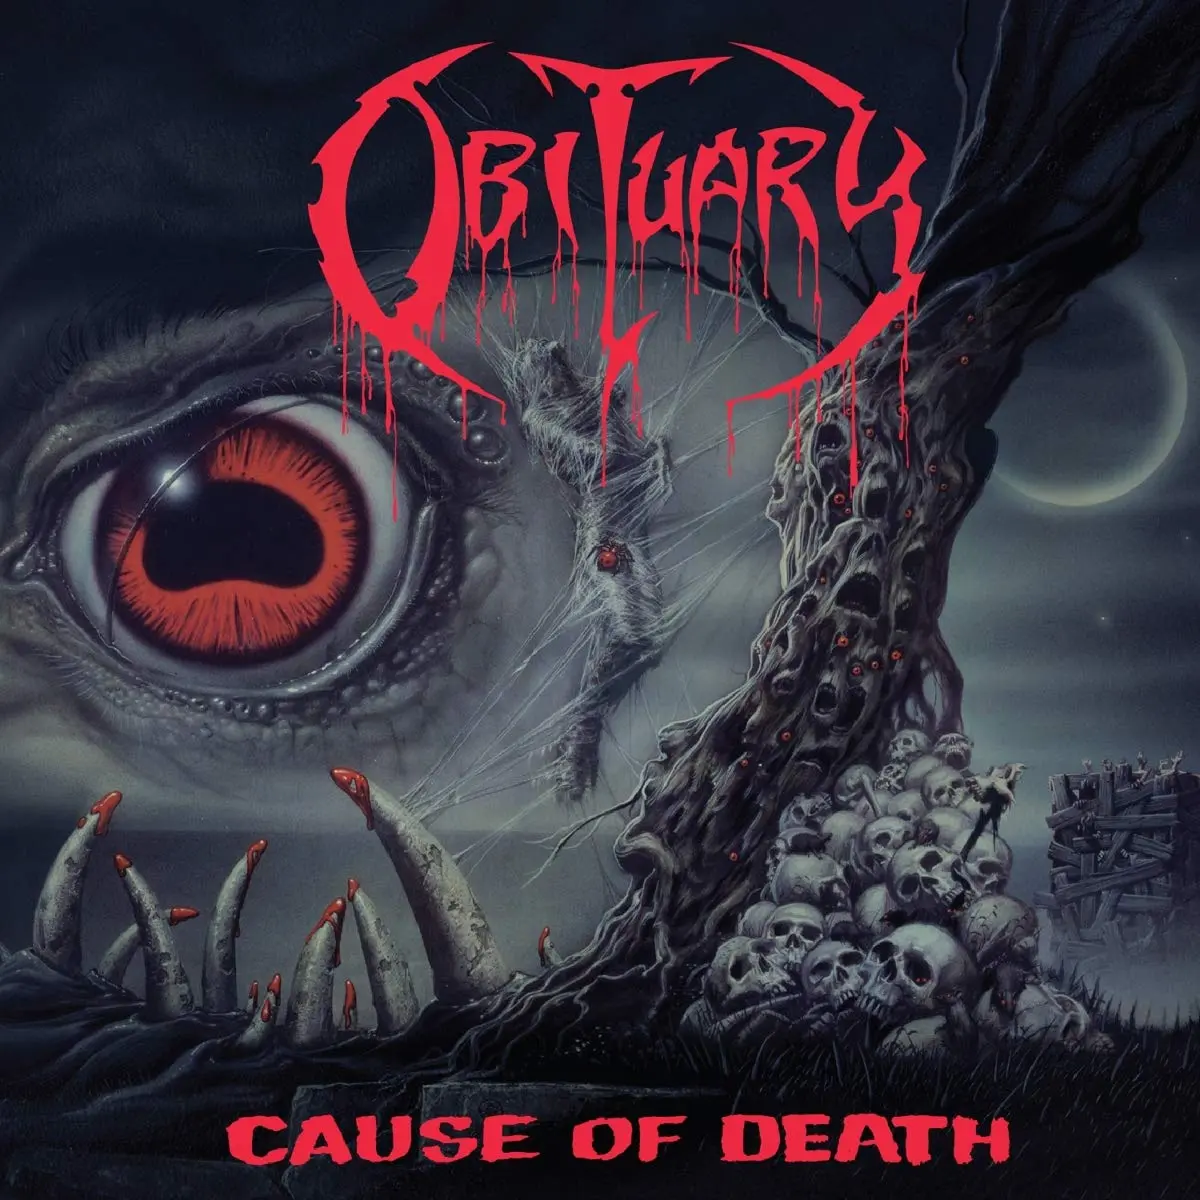 Obituary - Cause Of Death (1990)